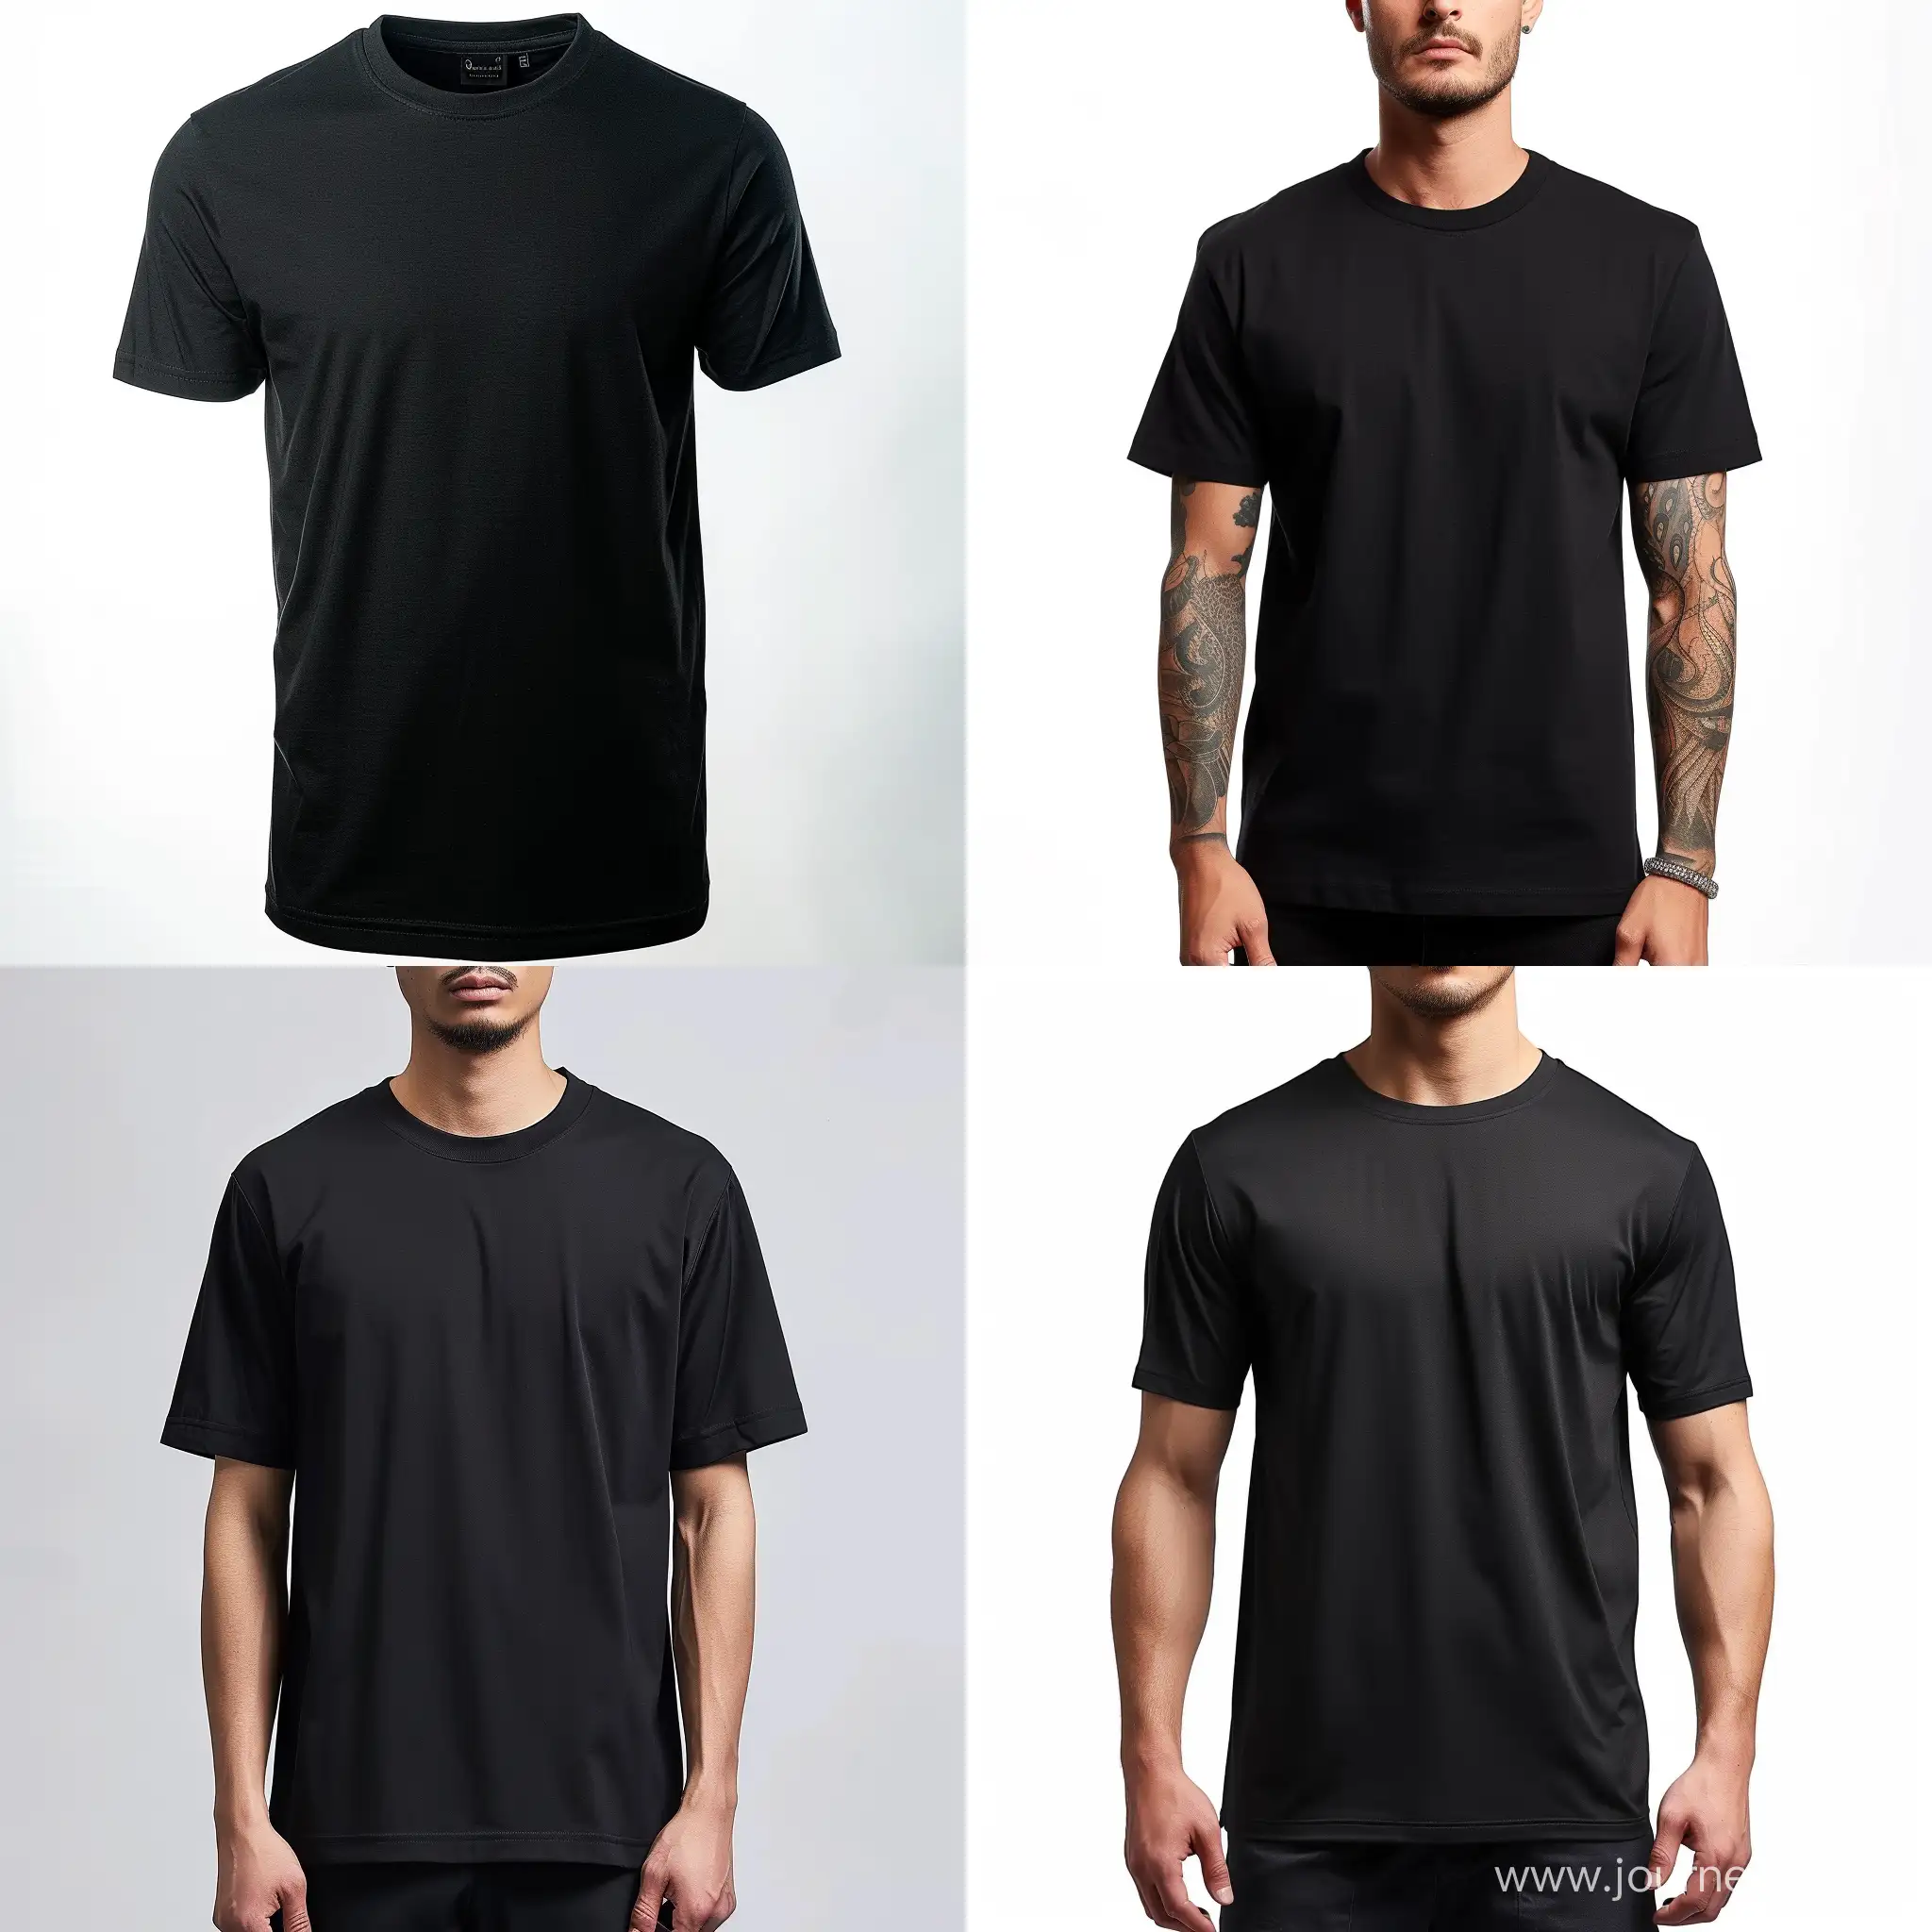 Reflective-Black-TShirt-for-Men-Qianying-Custom-Streetwear-Apparel-Photo